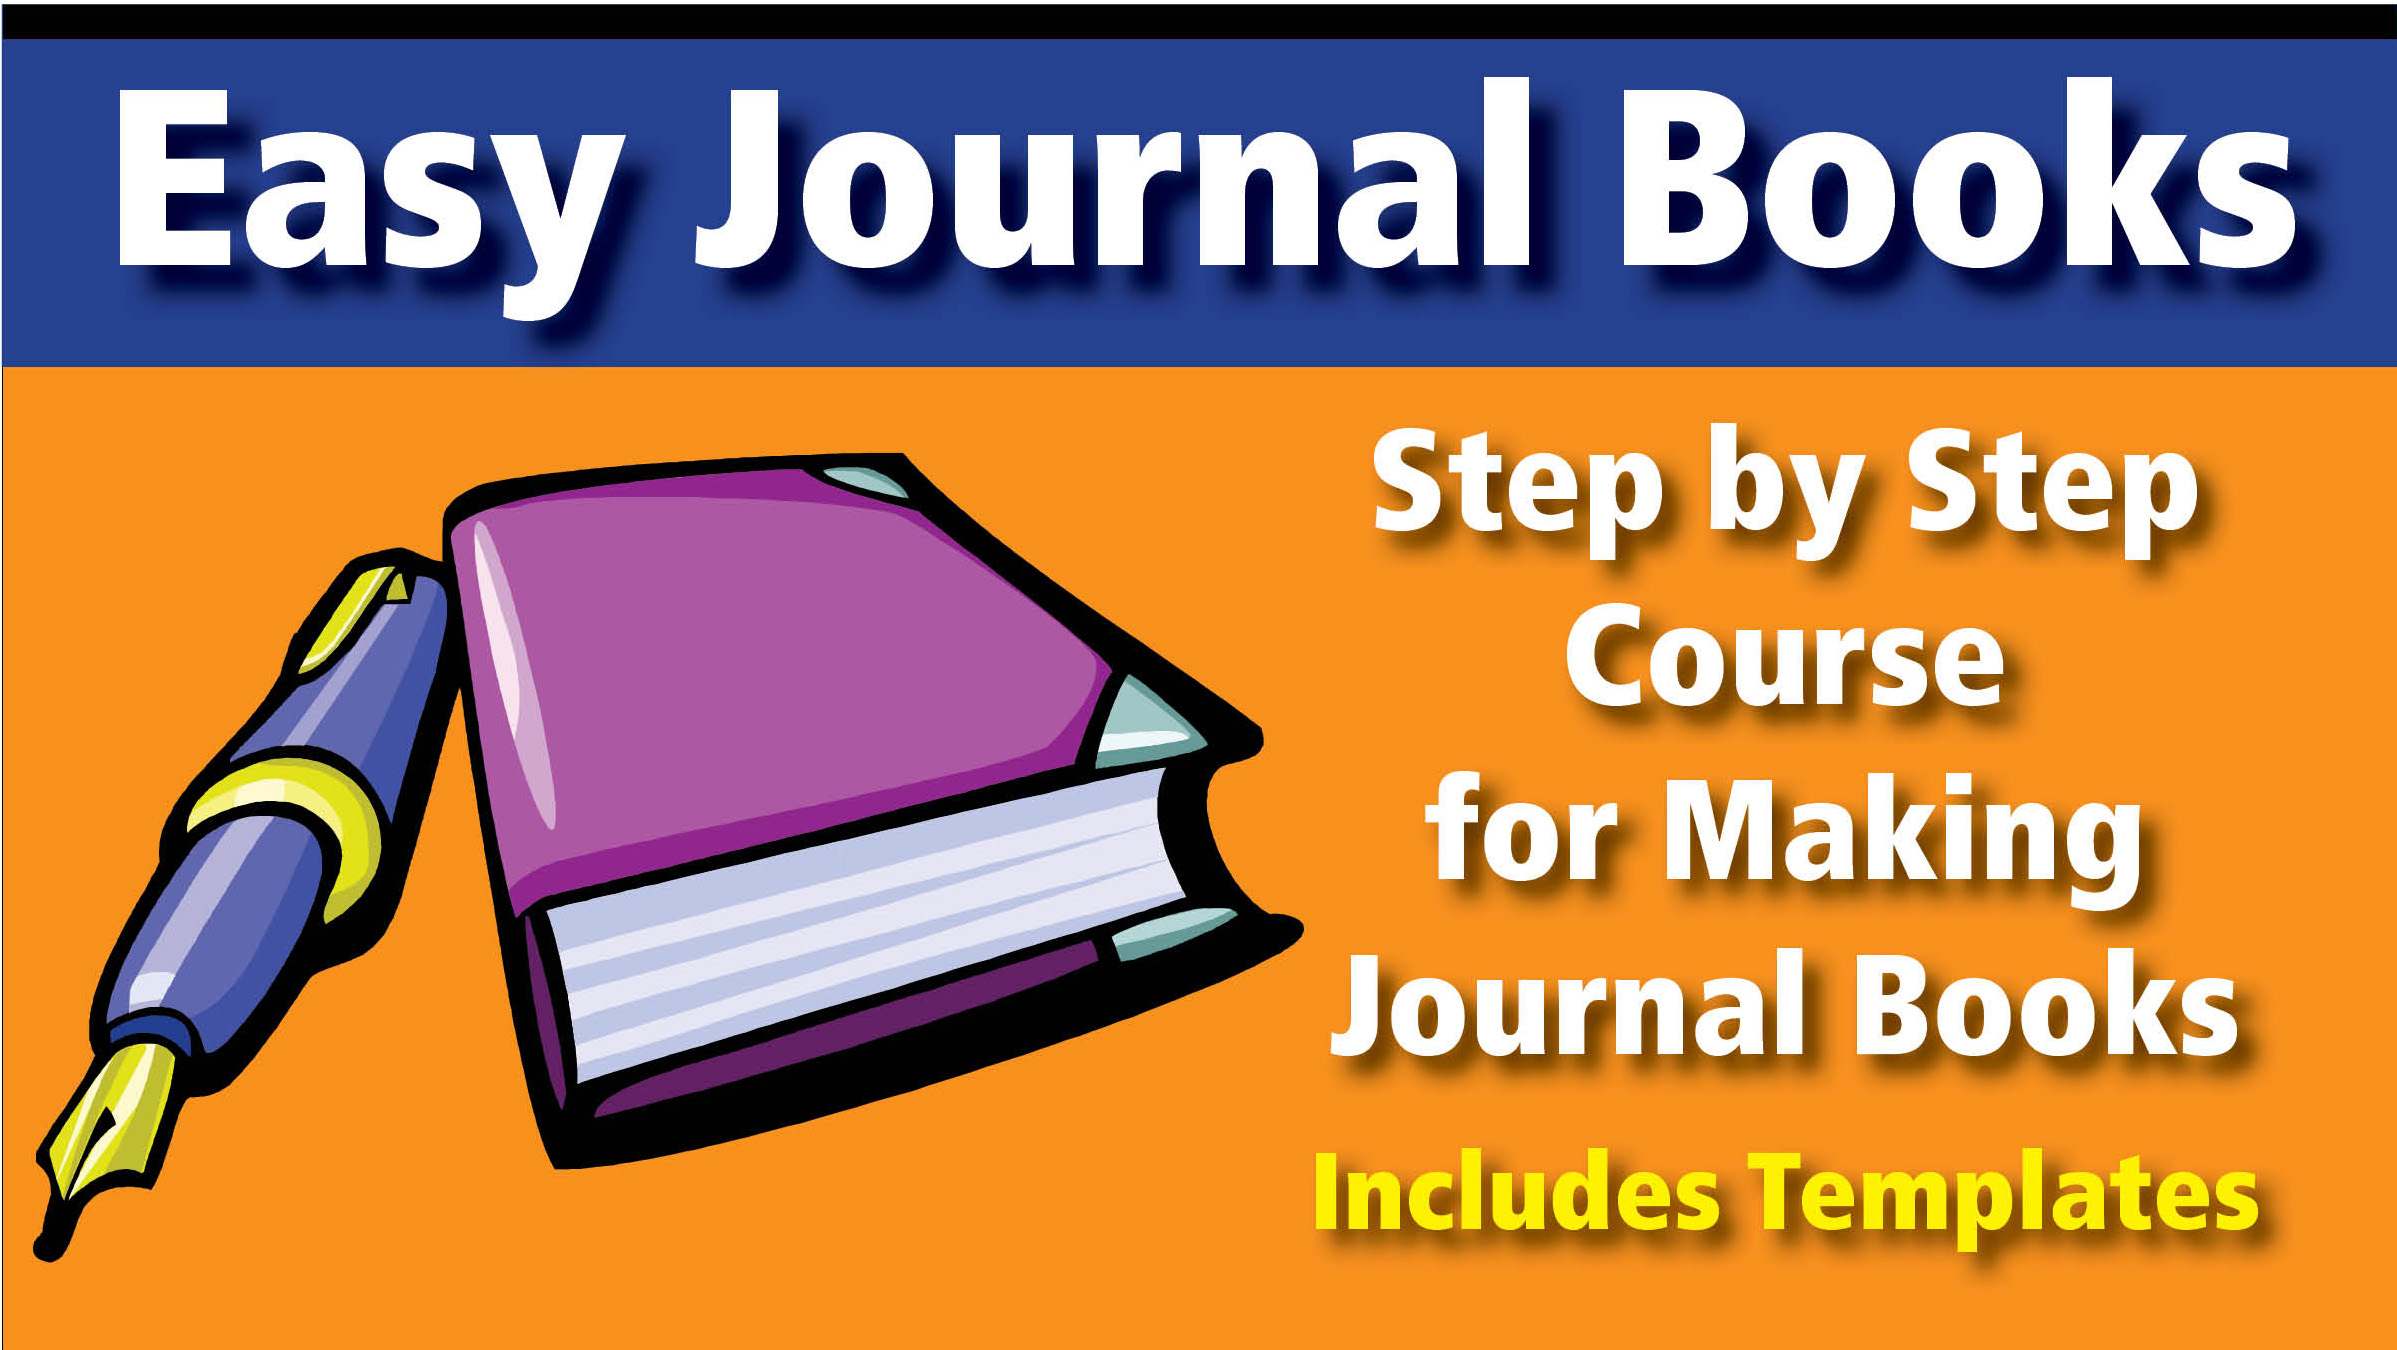 Easy Journal Books Publishing Mastery Academy Bruce Jones